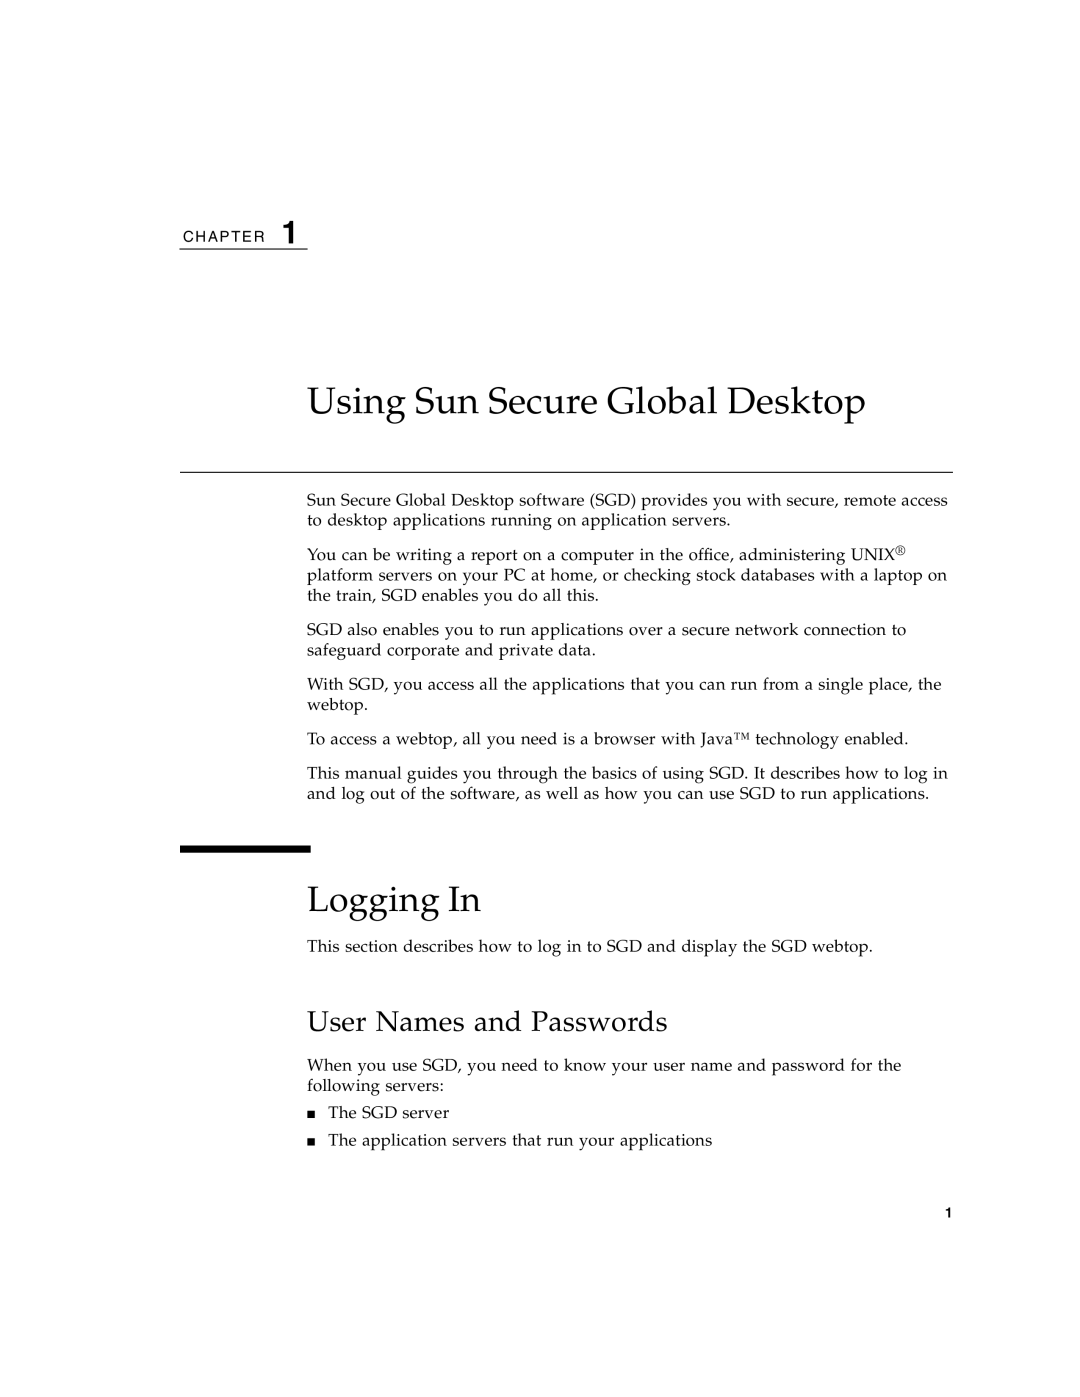 Sun Microsystems 4.5 manual Using Sun Secure Global Desktop, Logging In, User Names and Passwords 